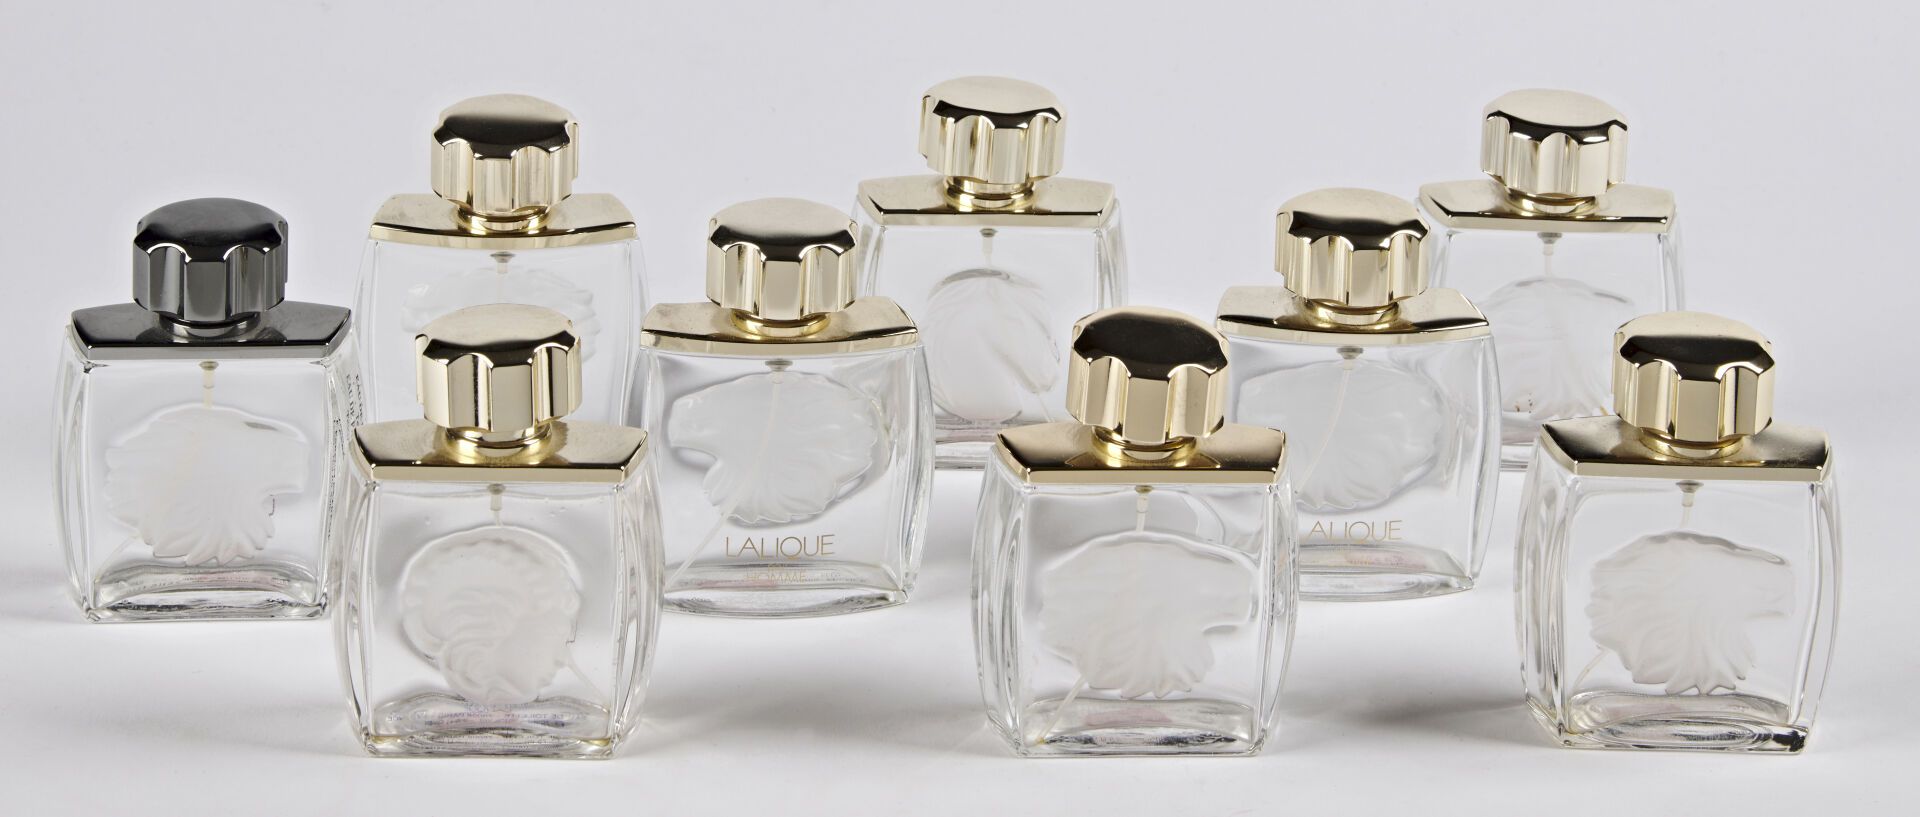 Null 拉利克水晶

一套7个 "狮子 "型号的香水瓶，一个 "法恩 "瓶和一个 "赤兔 "瓶。

白色模制水晶样板，缎面和抛光，配以金色和银色金属支架。

&hellip;